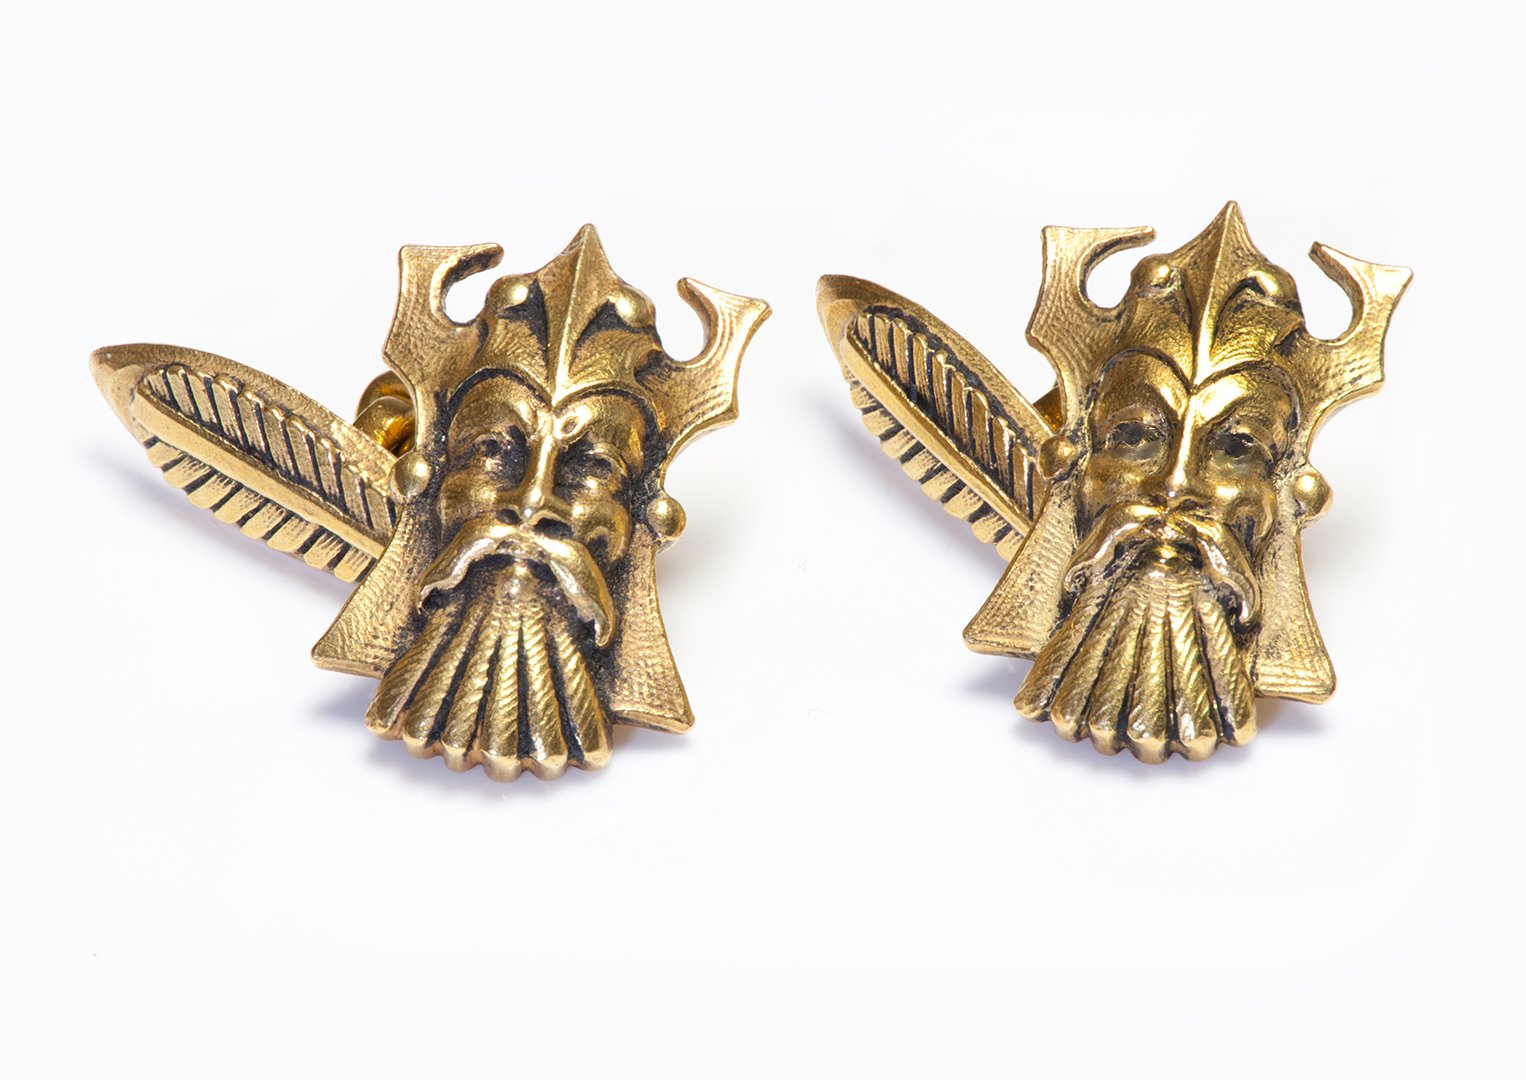 Antique Art Nouveau 18K Gold Viking Cufflinks